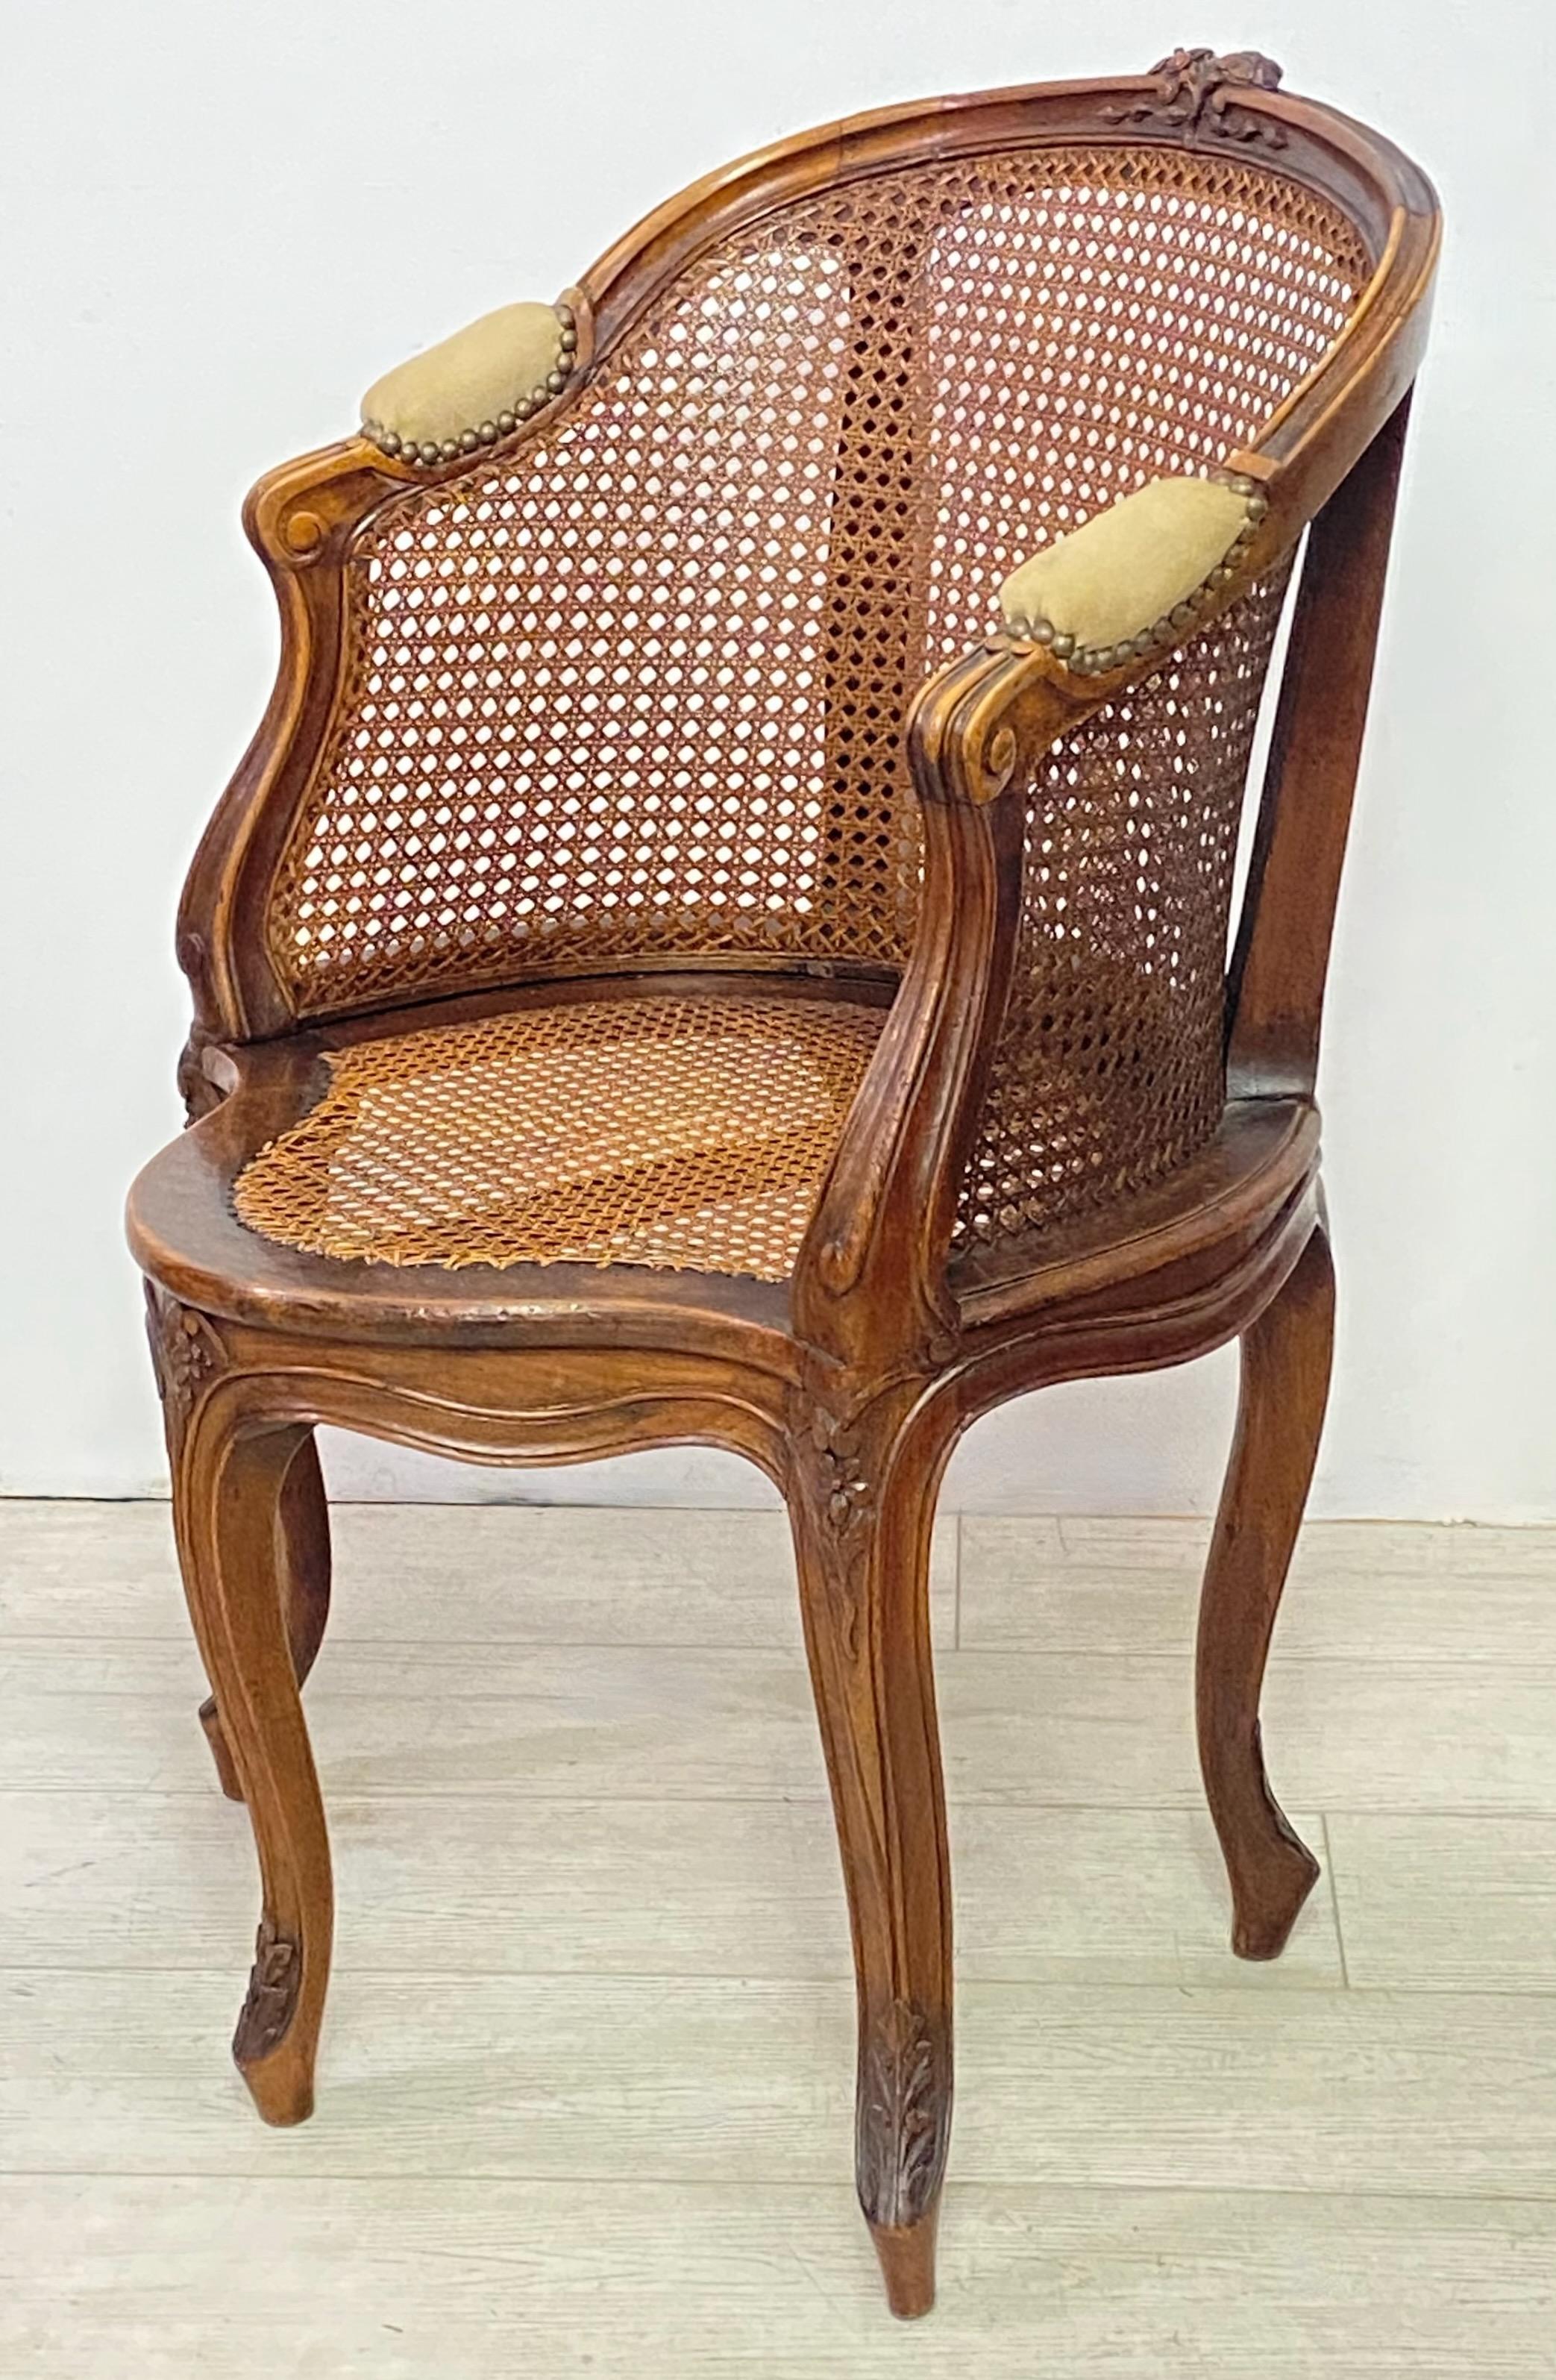 Carved French Louis XV Style Walnut Fauteuil de Bureau Desk Chair, Late 19th Century